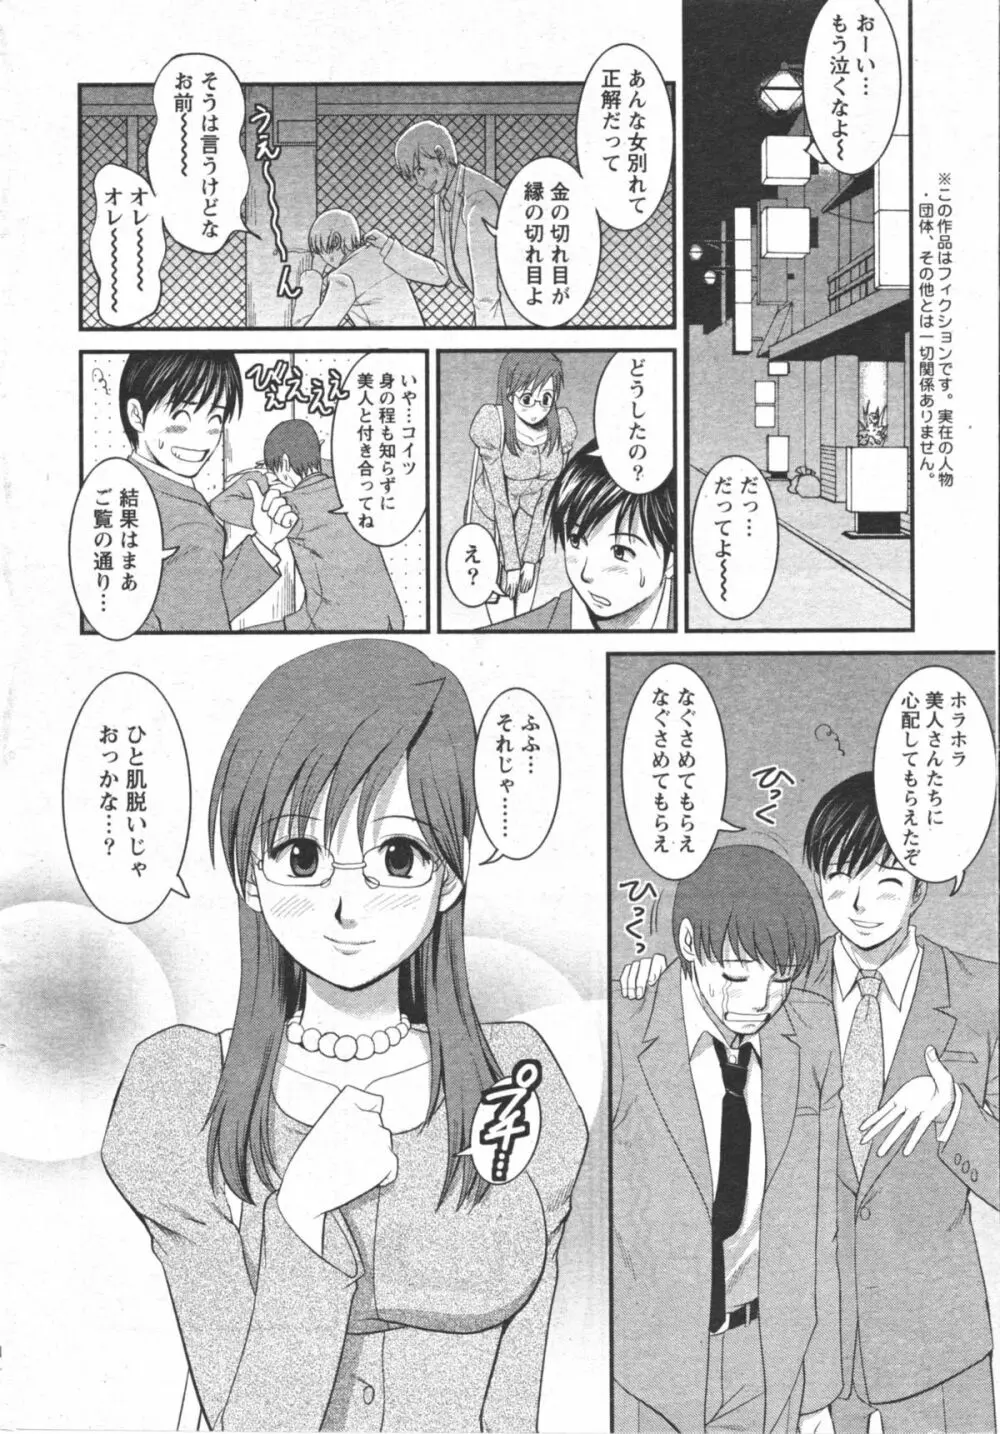 Haken no Muuko San 11 13ページ